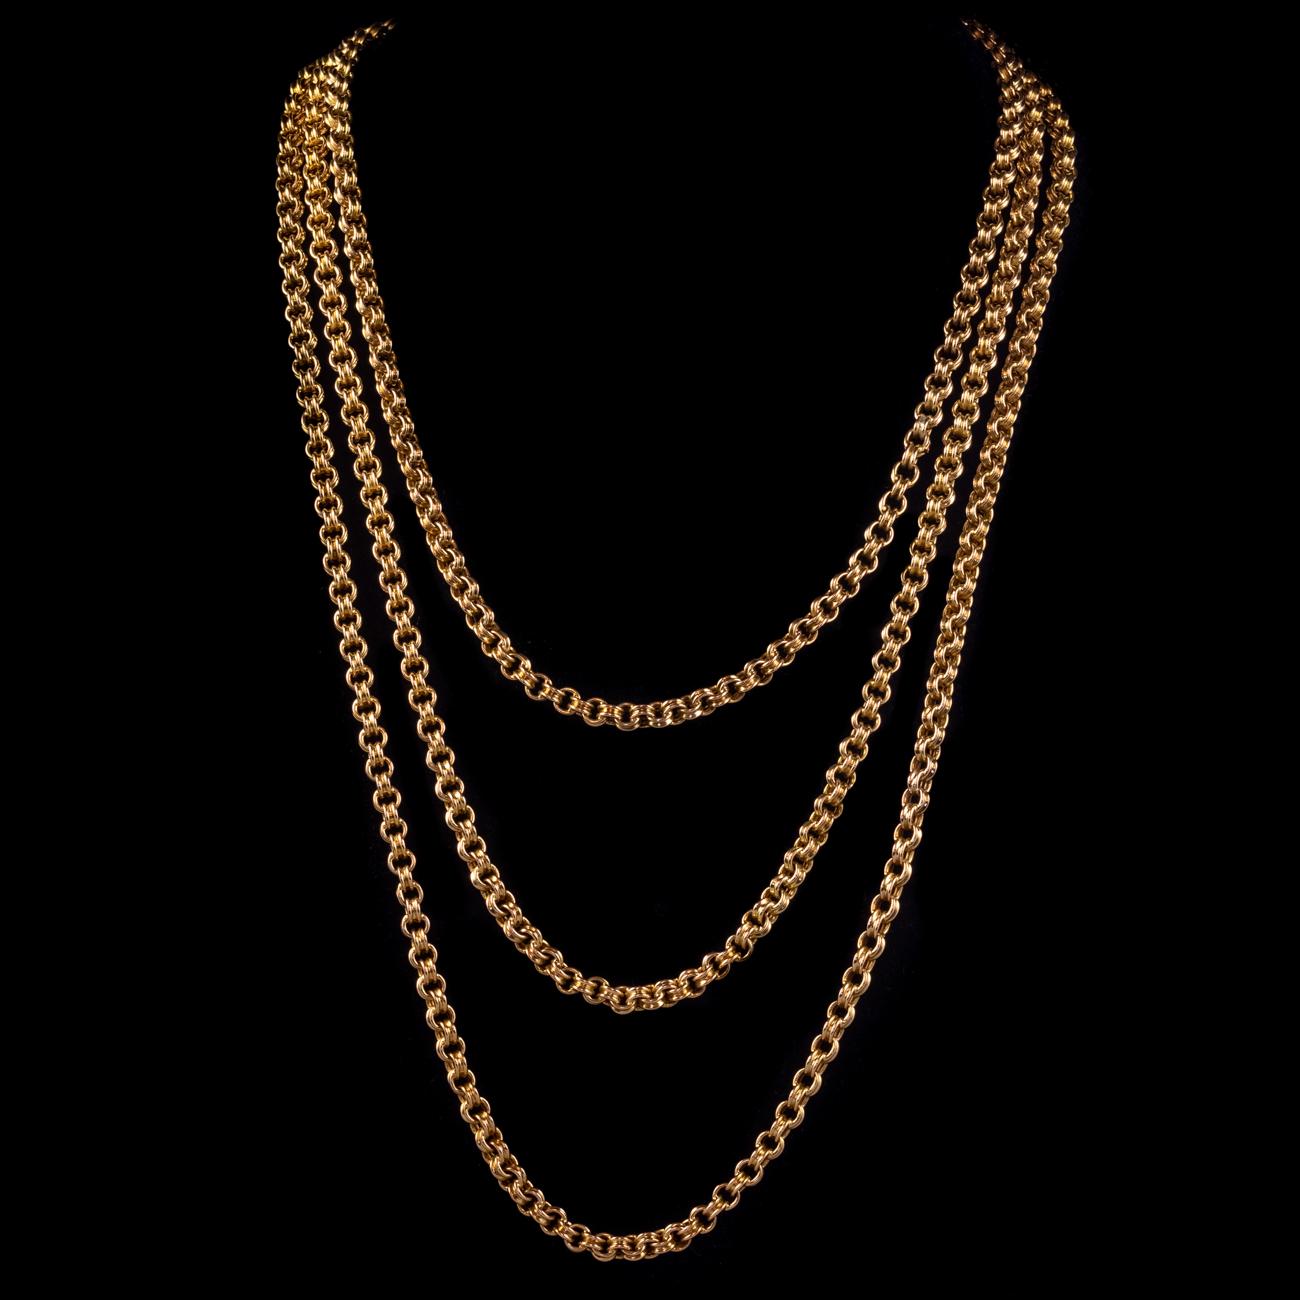 15ct gold chain